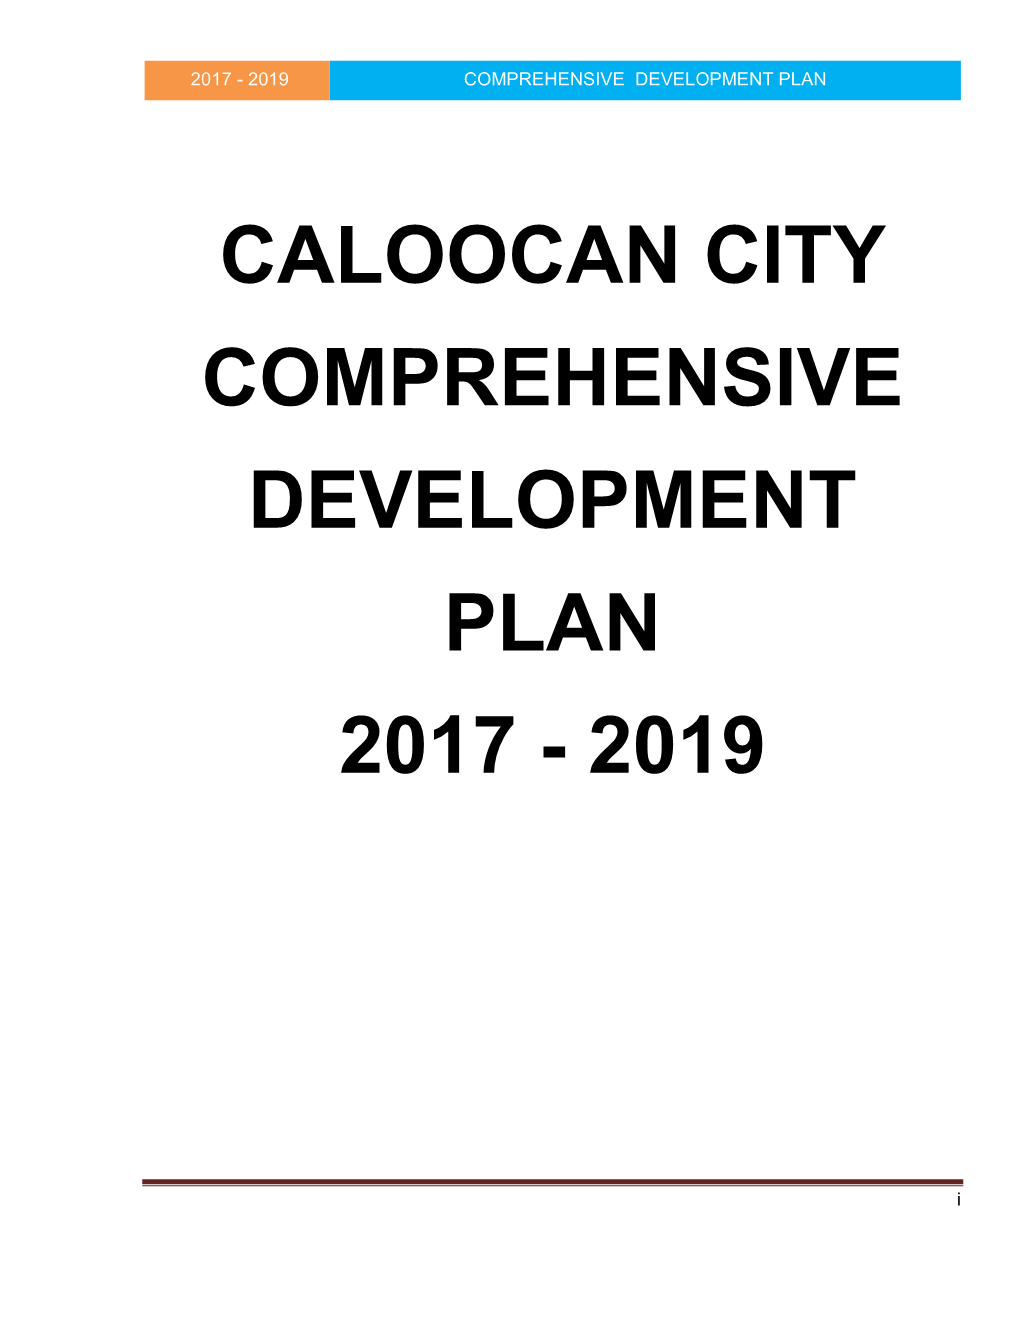 Caloocan City Comprehensive Development Plan 2017-2019